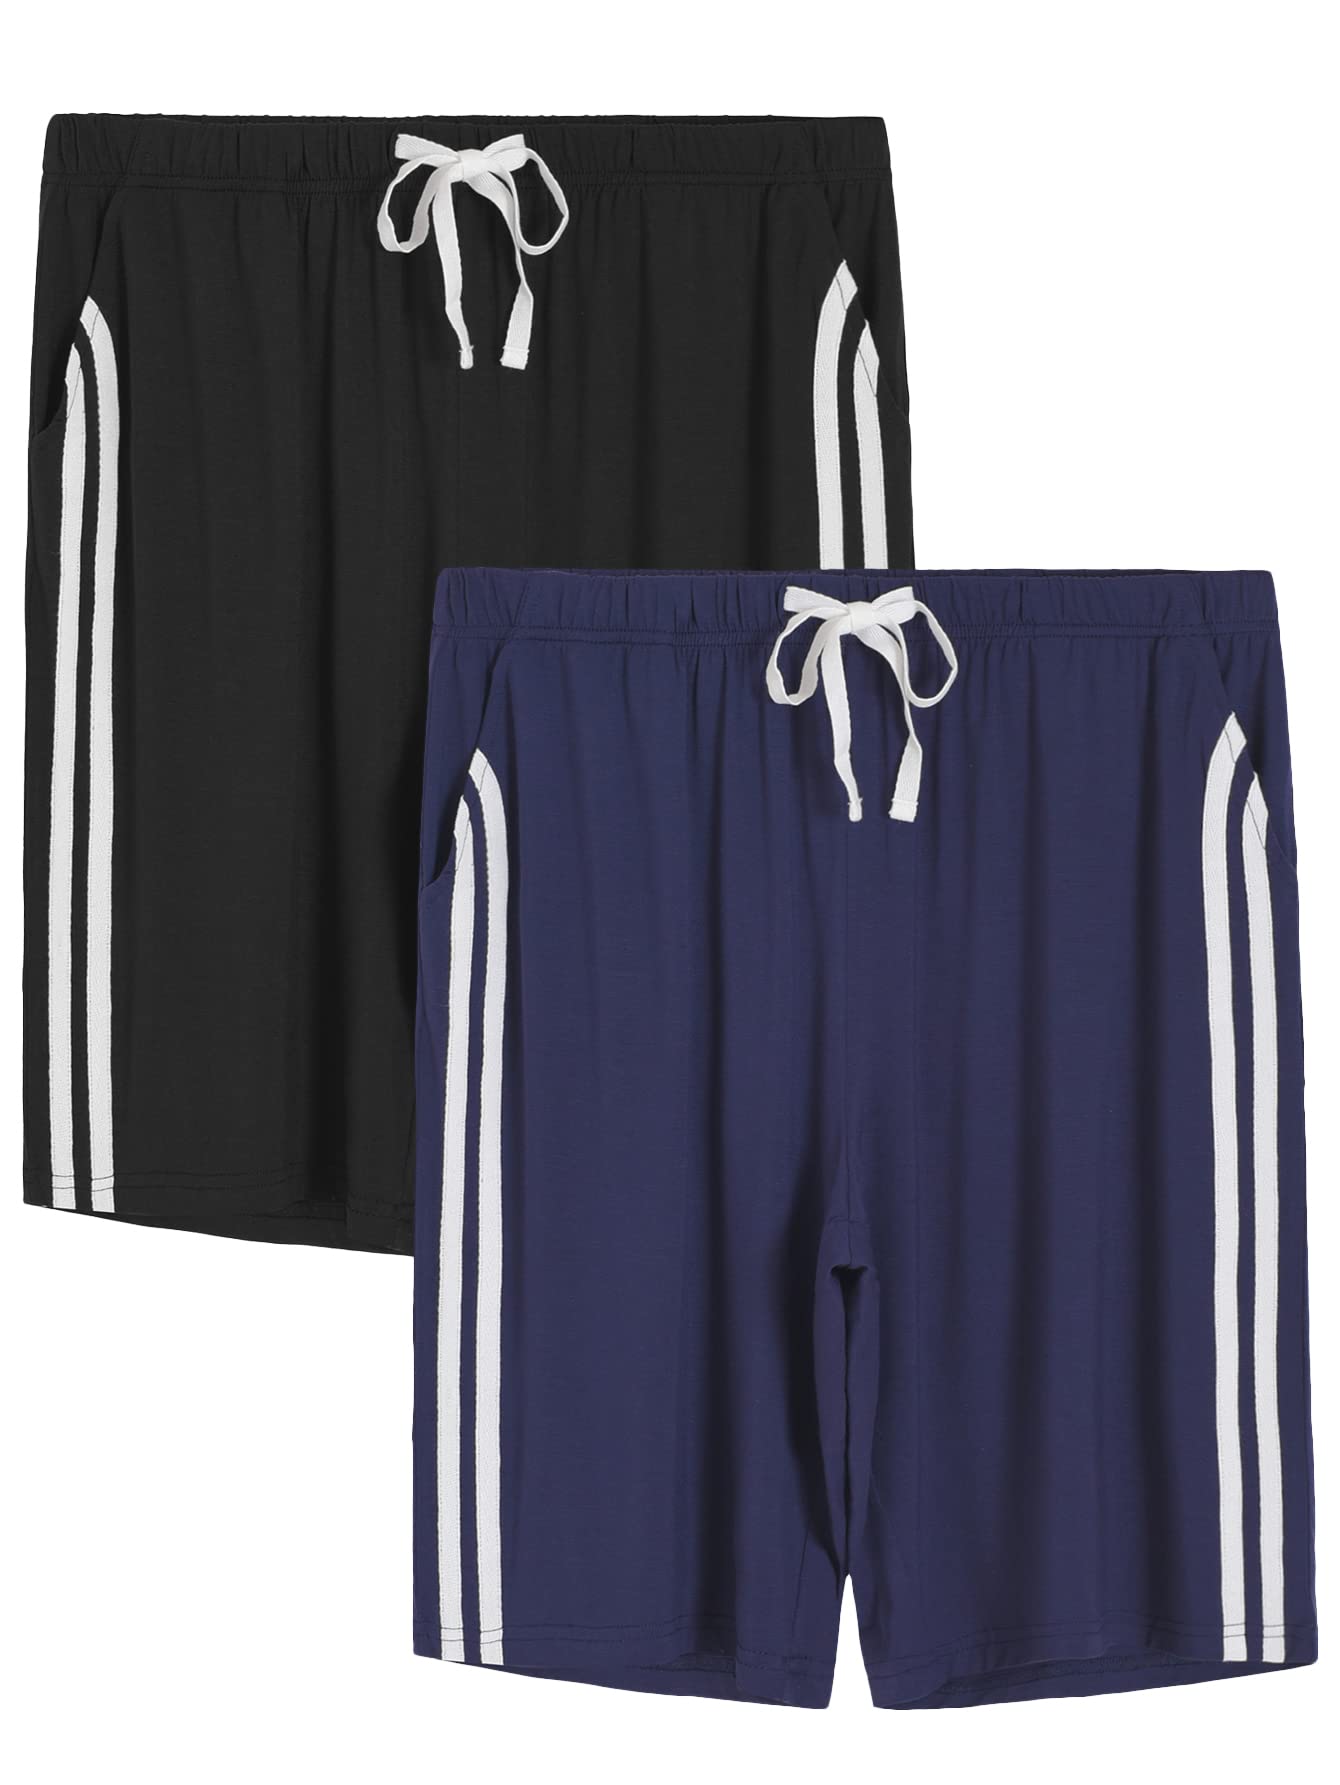 Women's Bamboo Viscose Lounge Bermuda Pajama Shorts with Pockets - Latuza